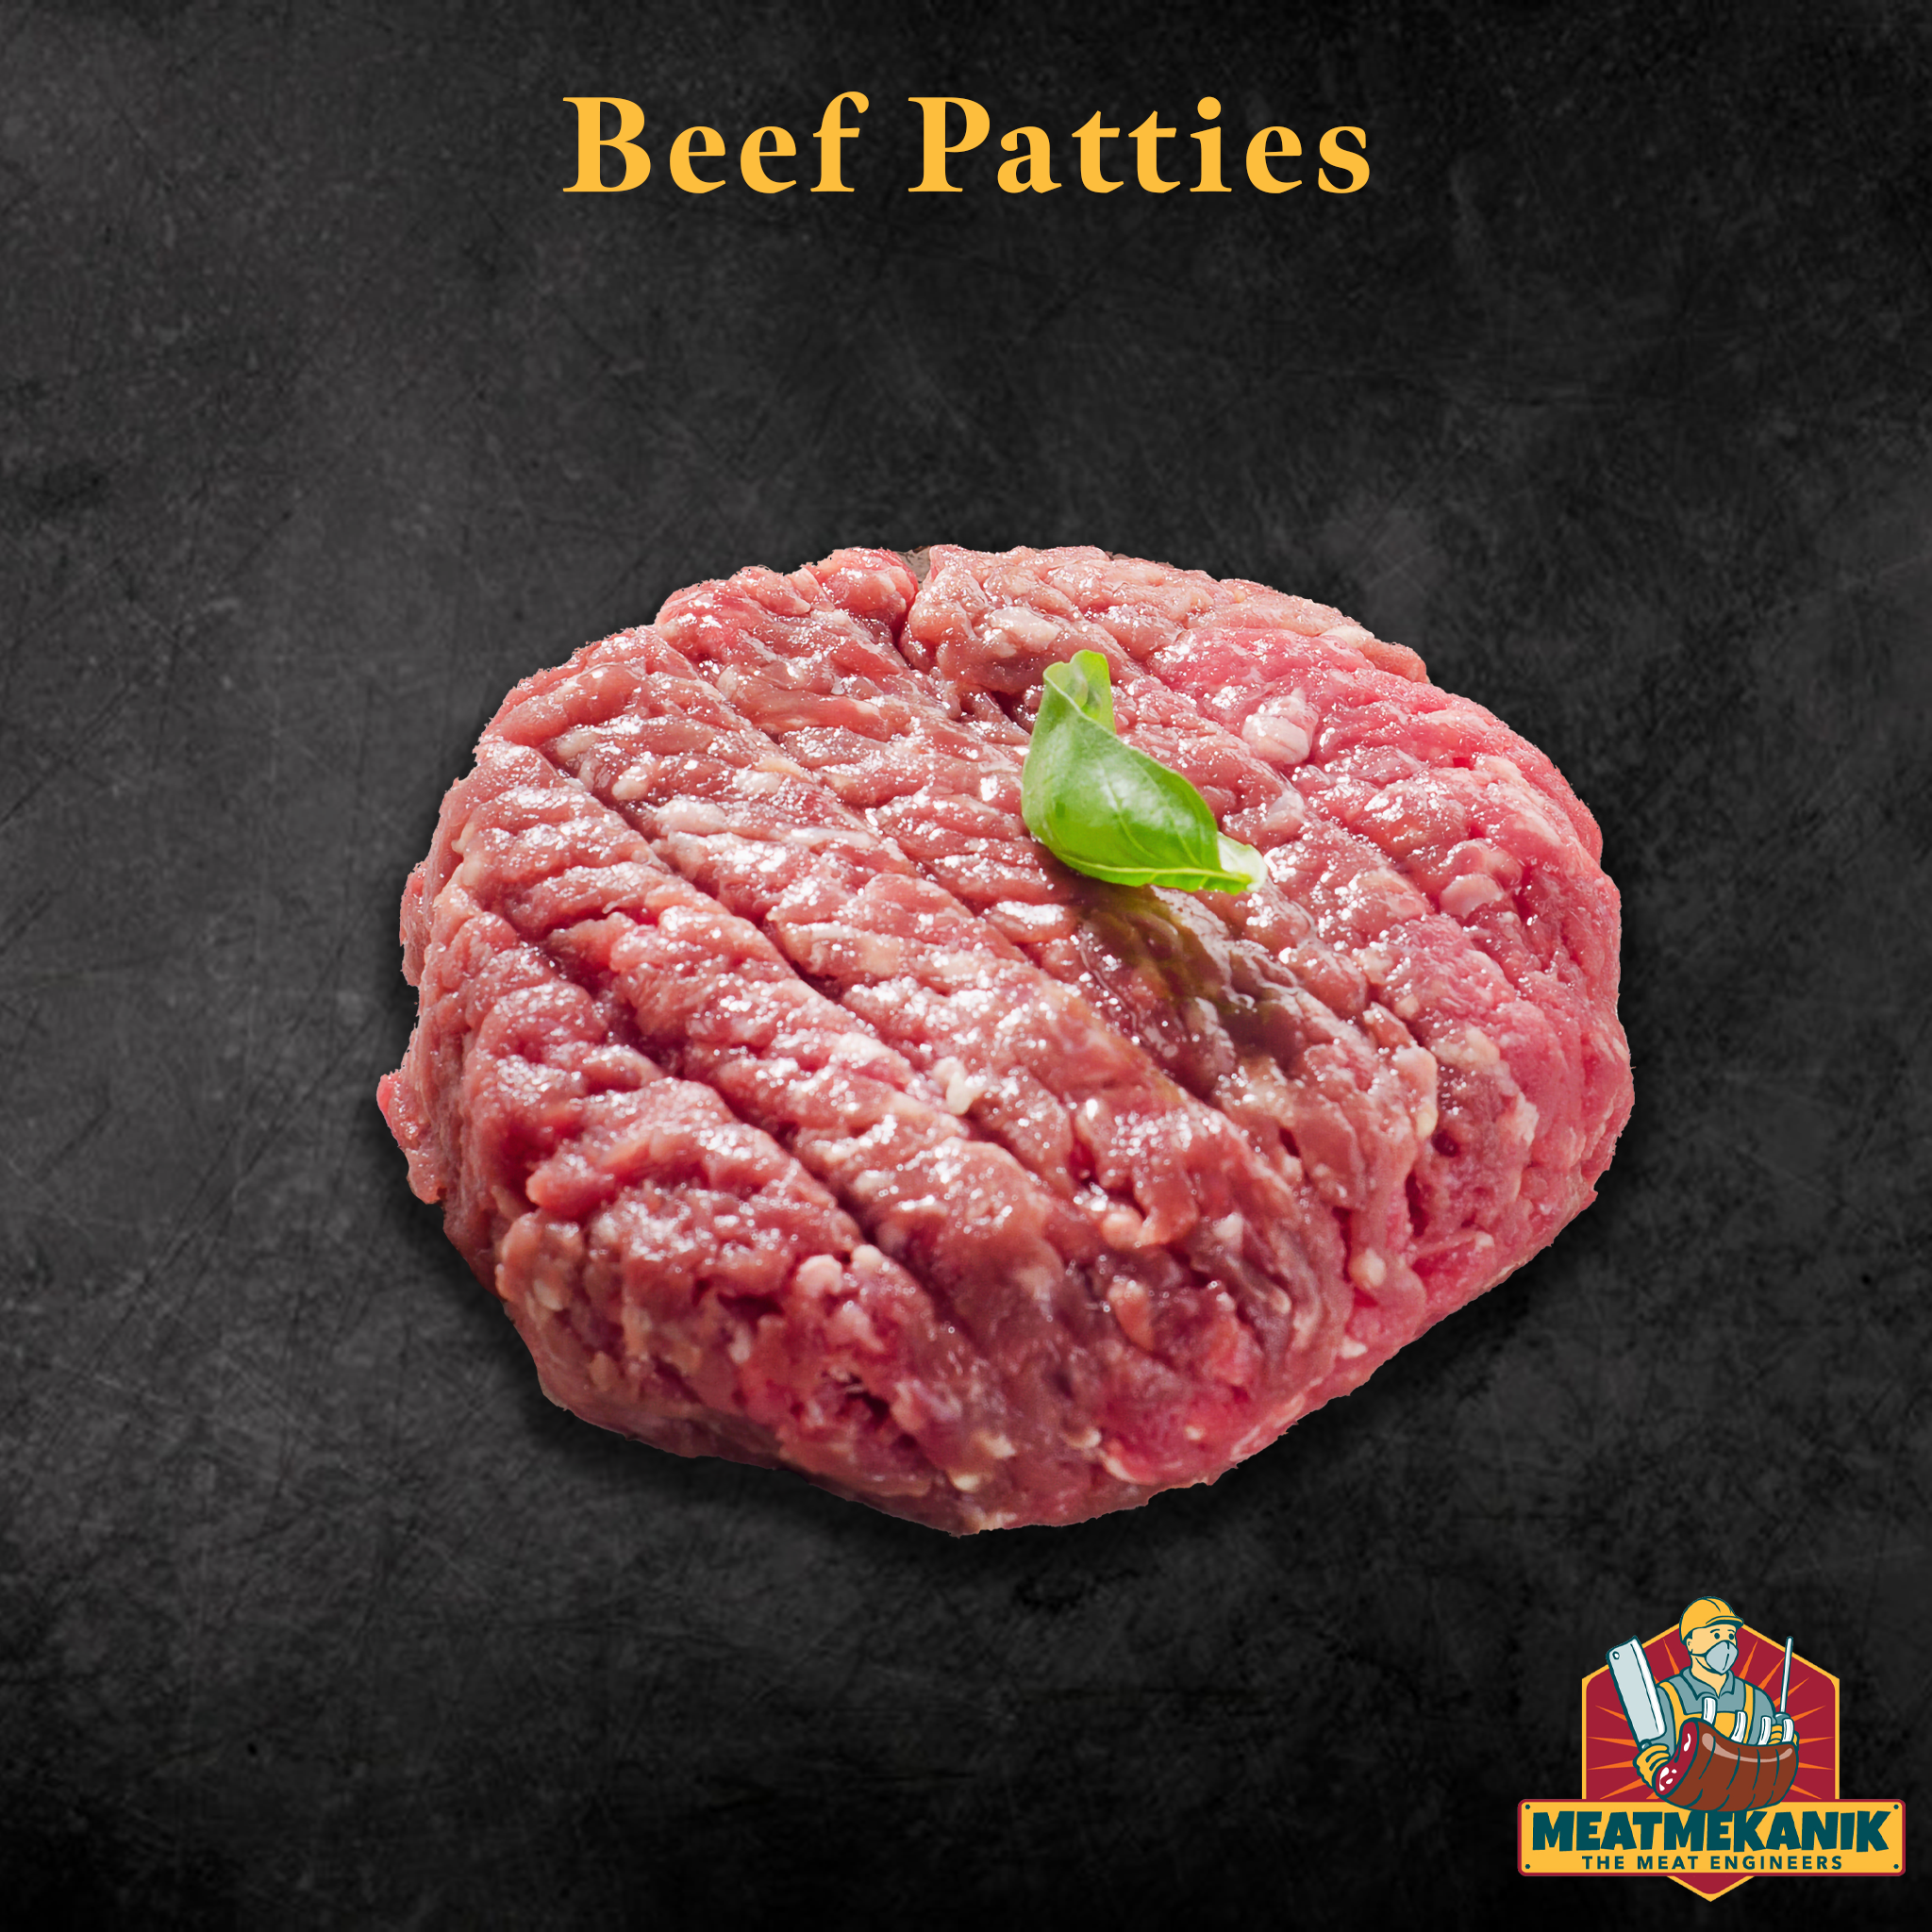 Beef Patties - Meat Mekanik